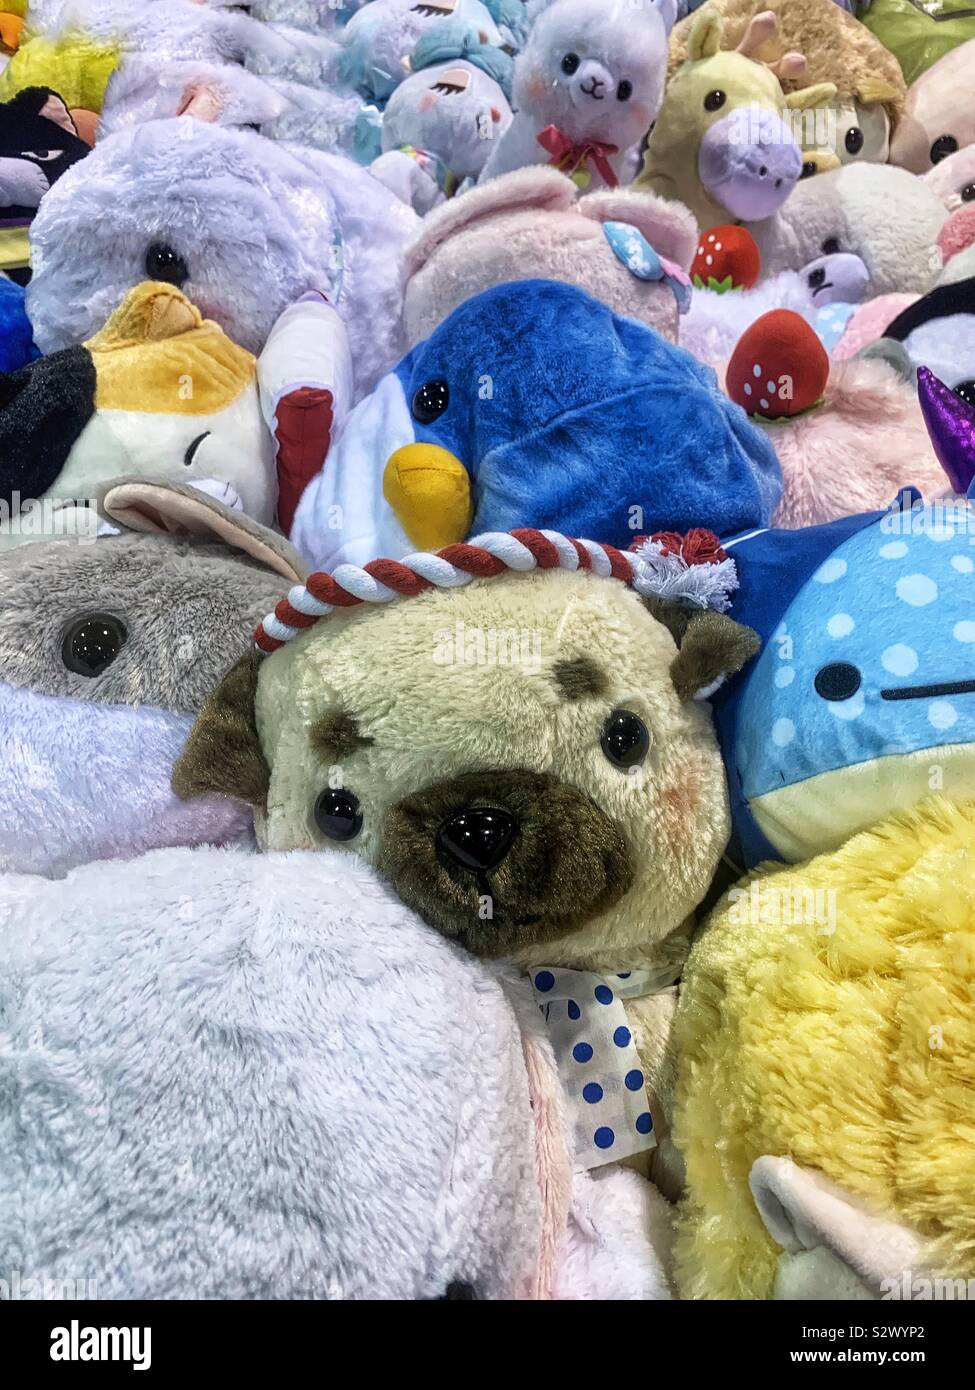 Sea of super cute stuffed animals. Stock Photo